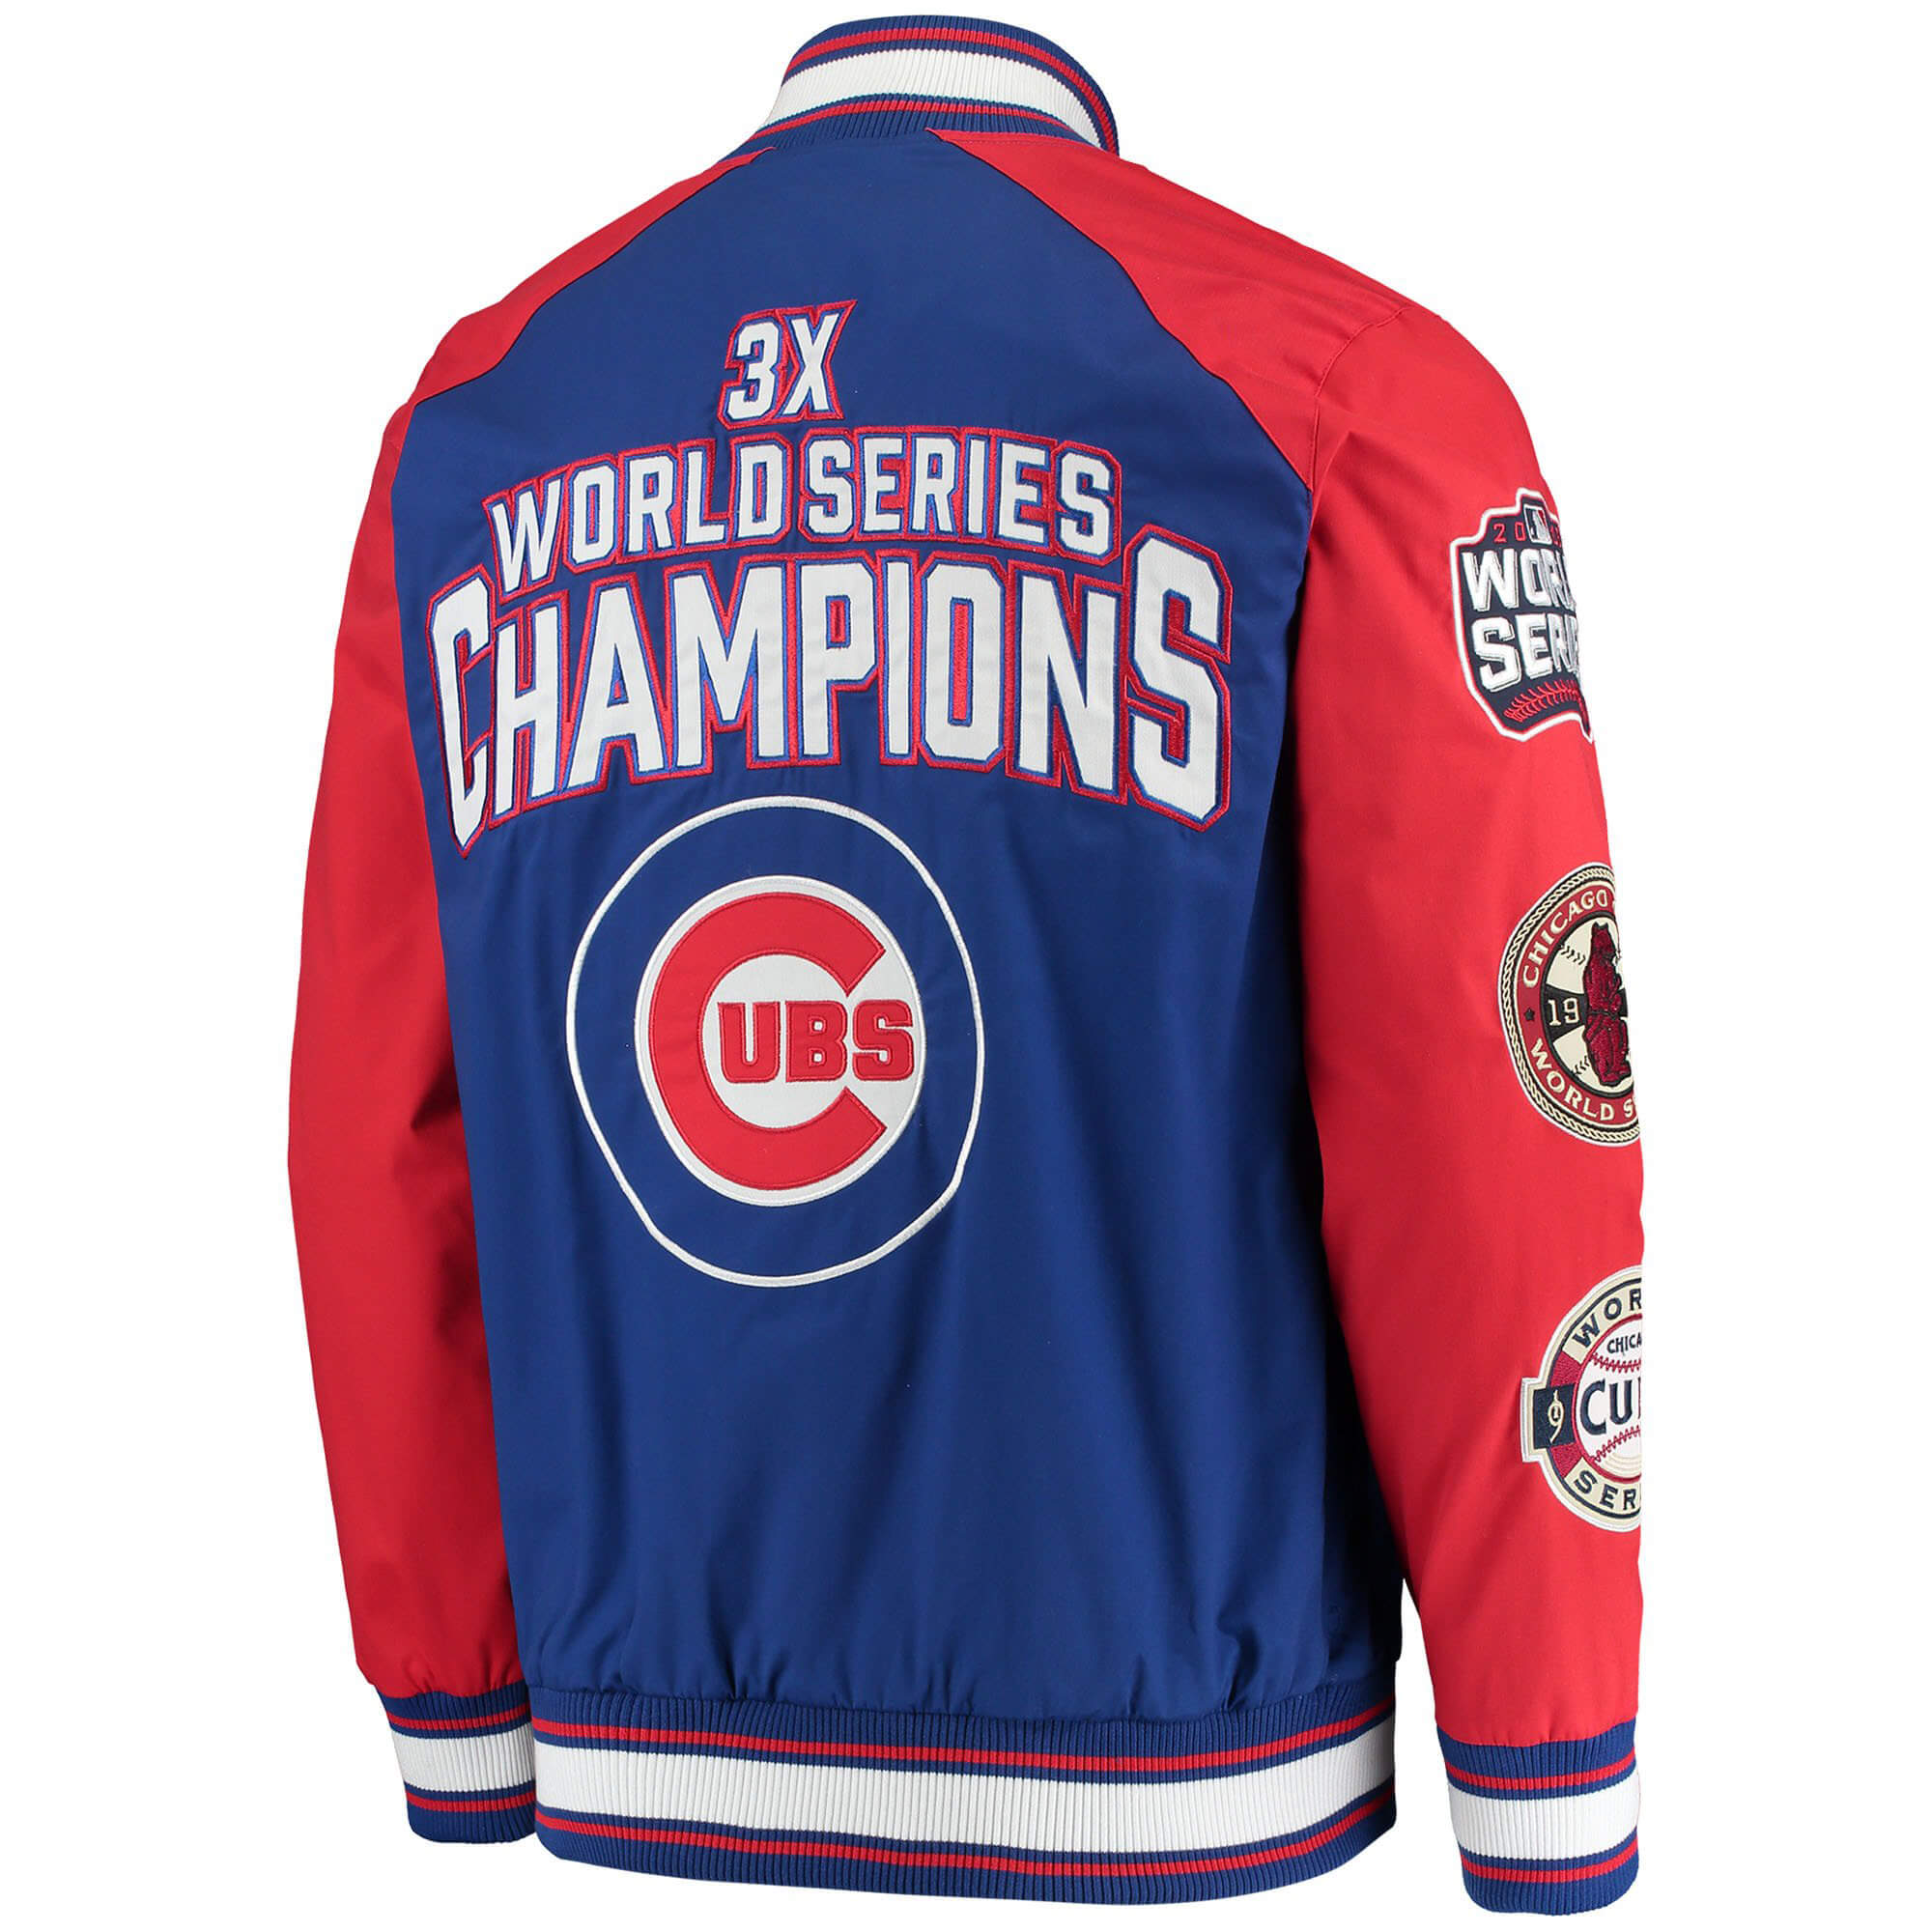 Maker of Jacket MLB Chicago Cubs 3X World Series Champions Varsity